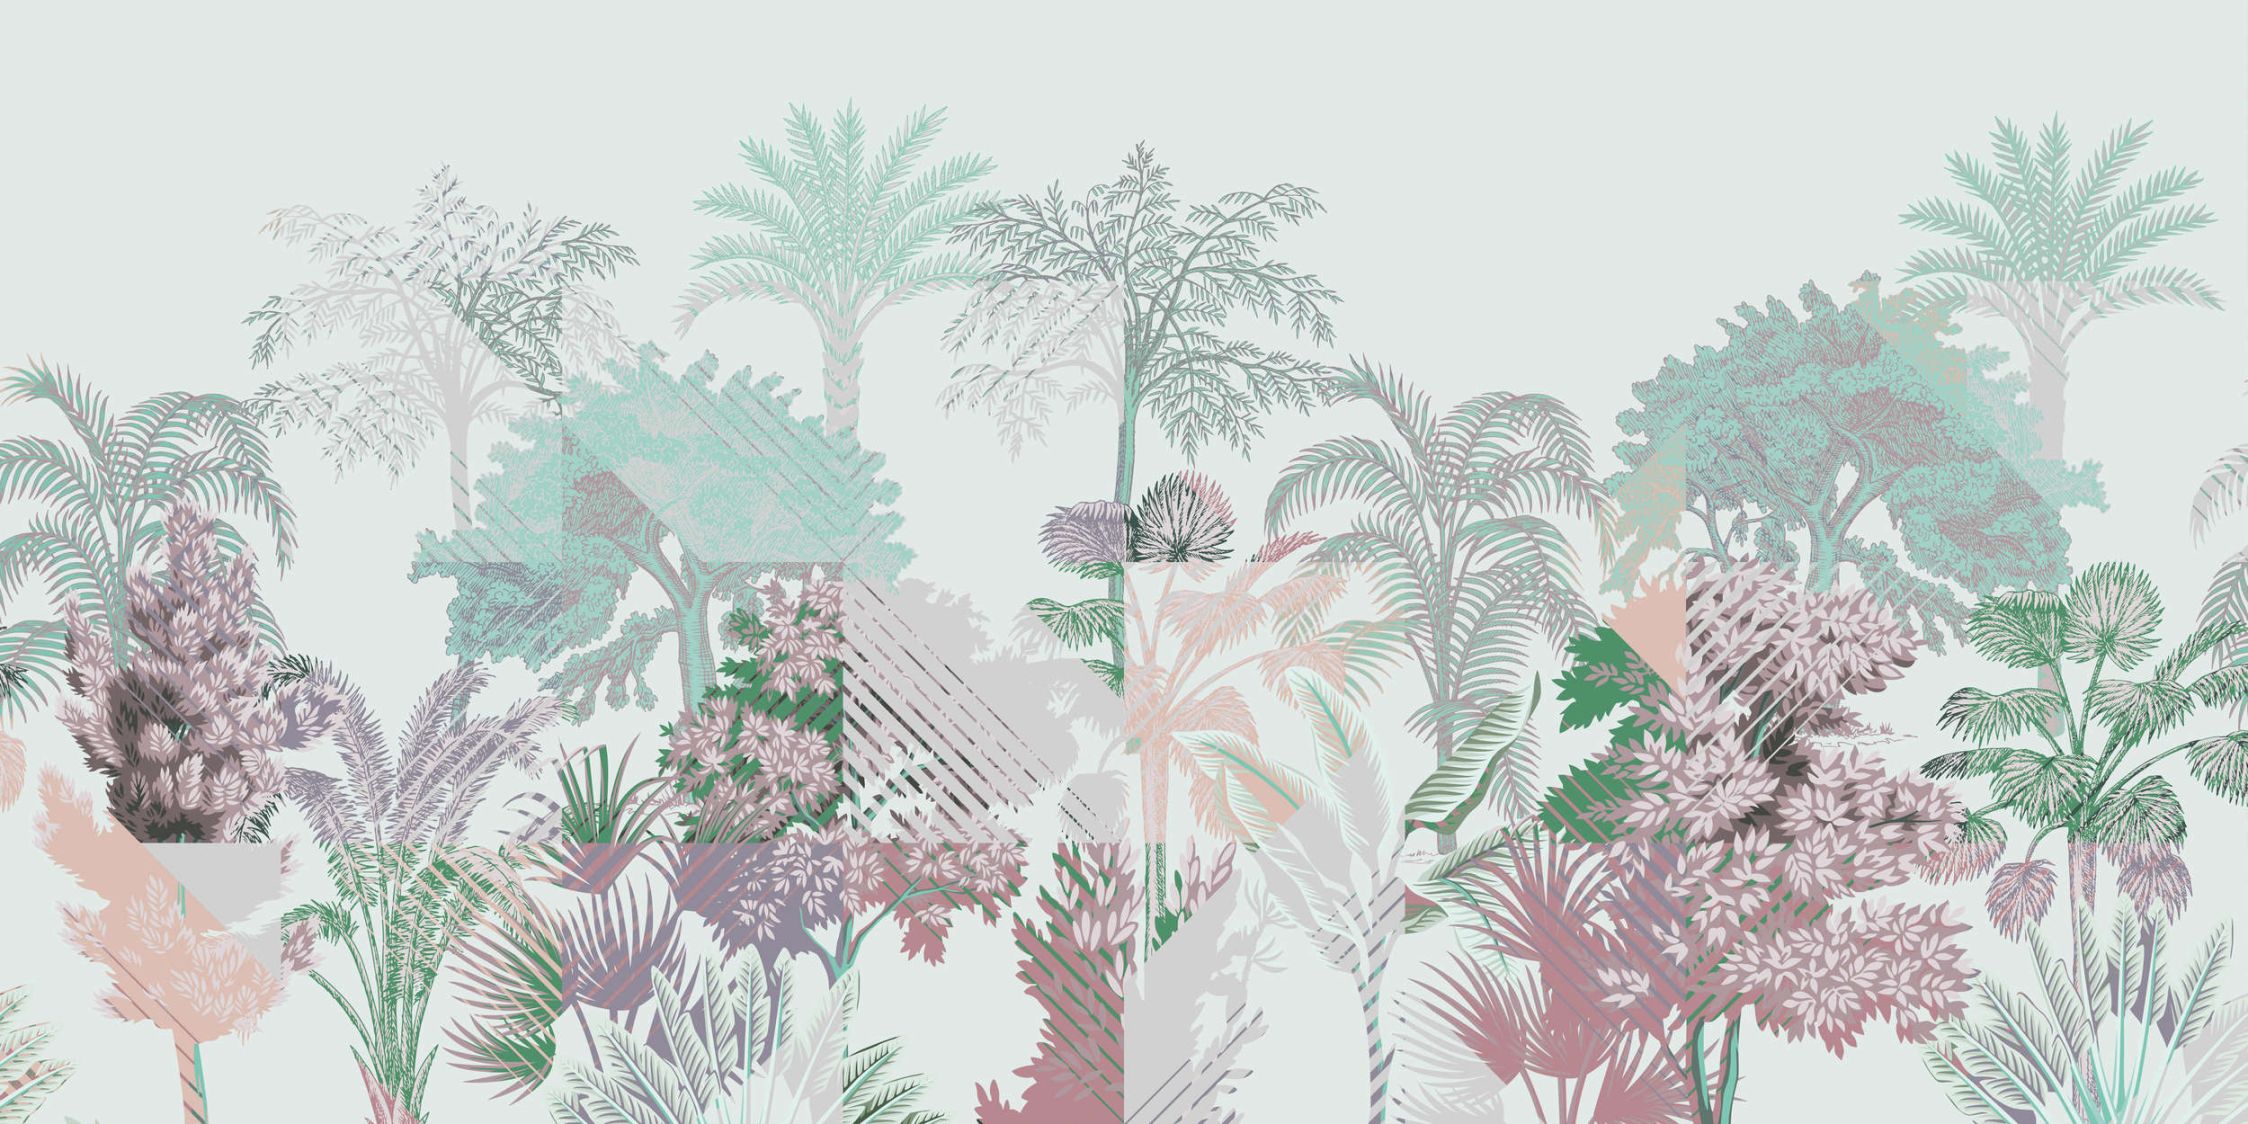             Fotomurali »esplanade 1« - Giungla patchwork con arbusti - Verde, Rosa | Materiali non tessuto premium liscio, leggermente lucido
        